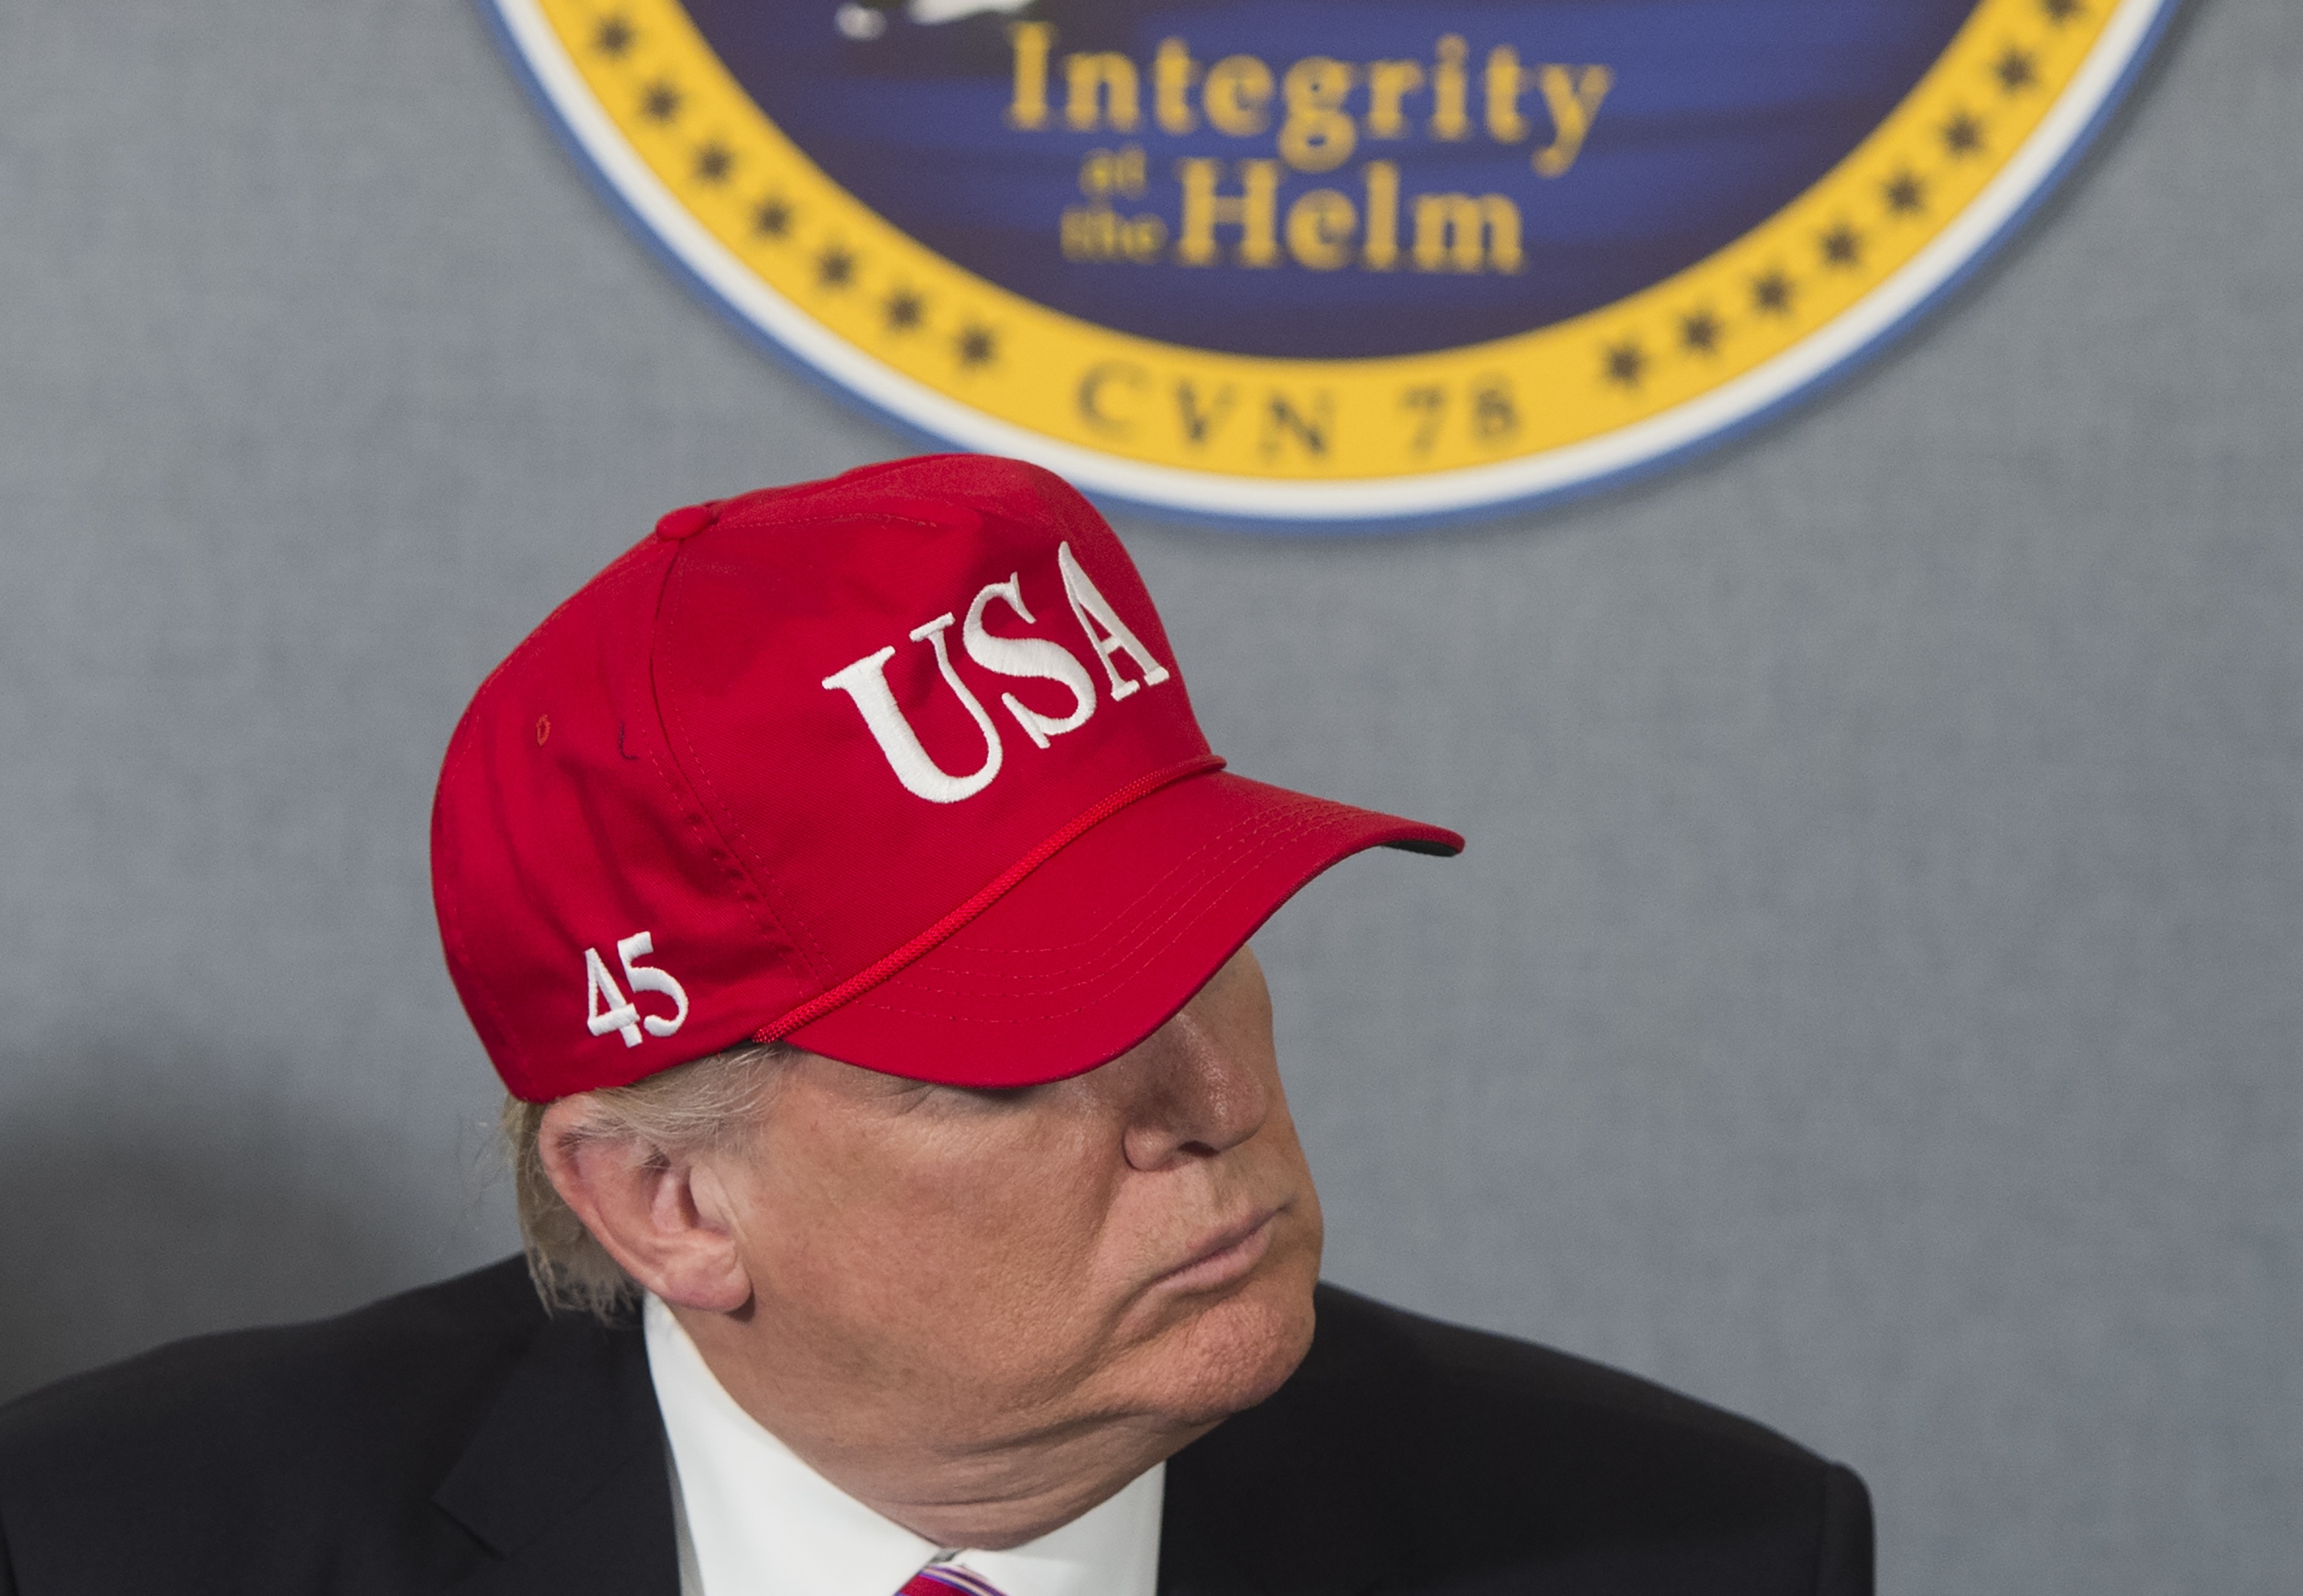 030917_Donald Trump_red hat